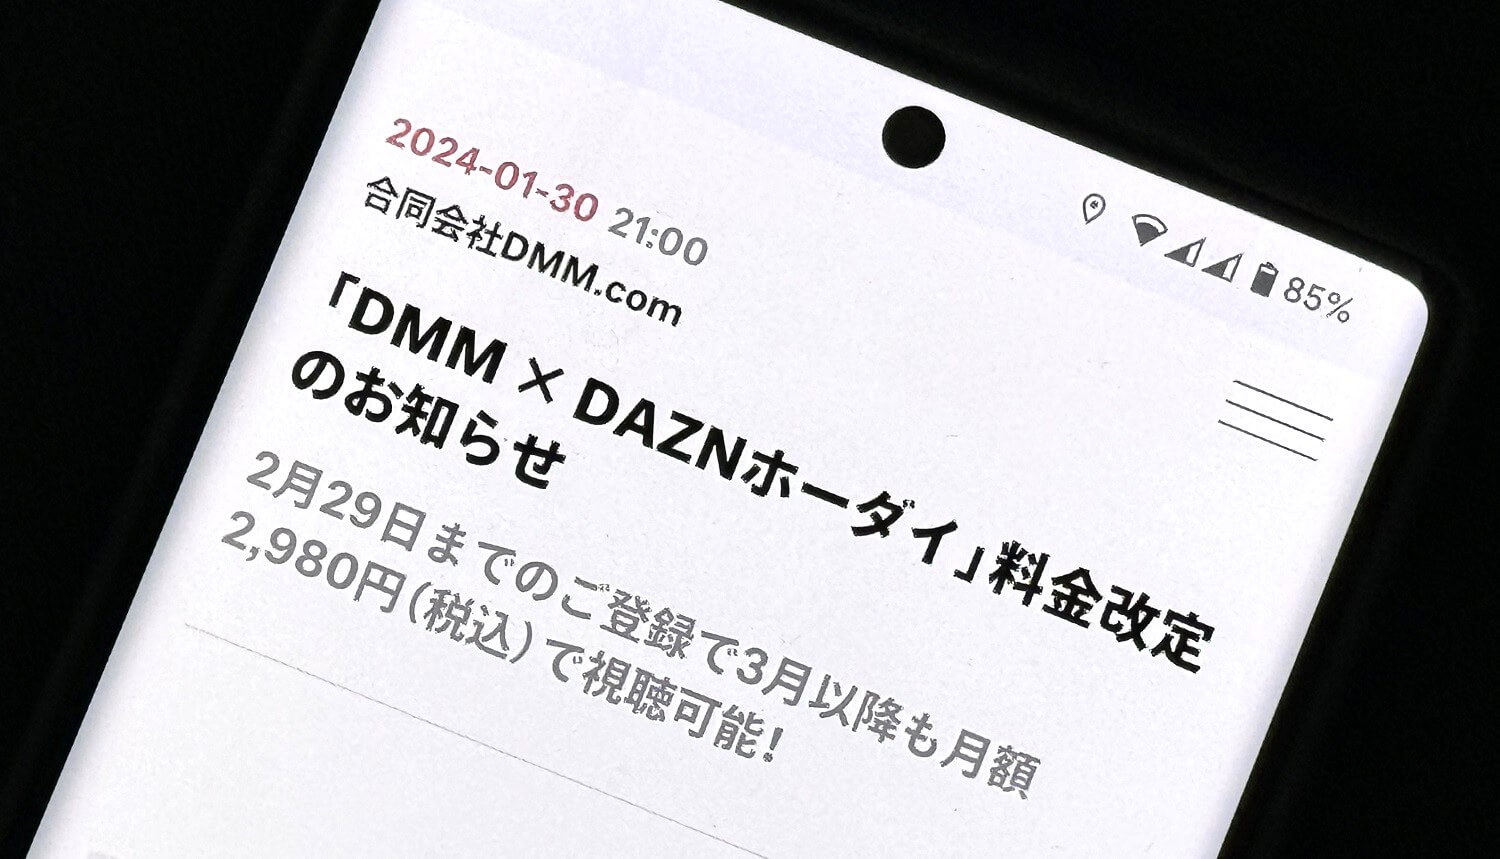 DMM×DAZNホーダイが2024年3月から値上げ。既存ユーザーは月額料金据え置きで利用できる